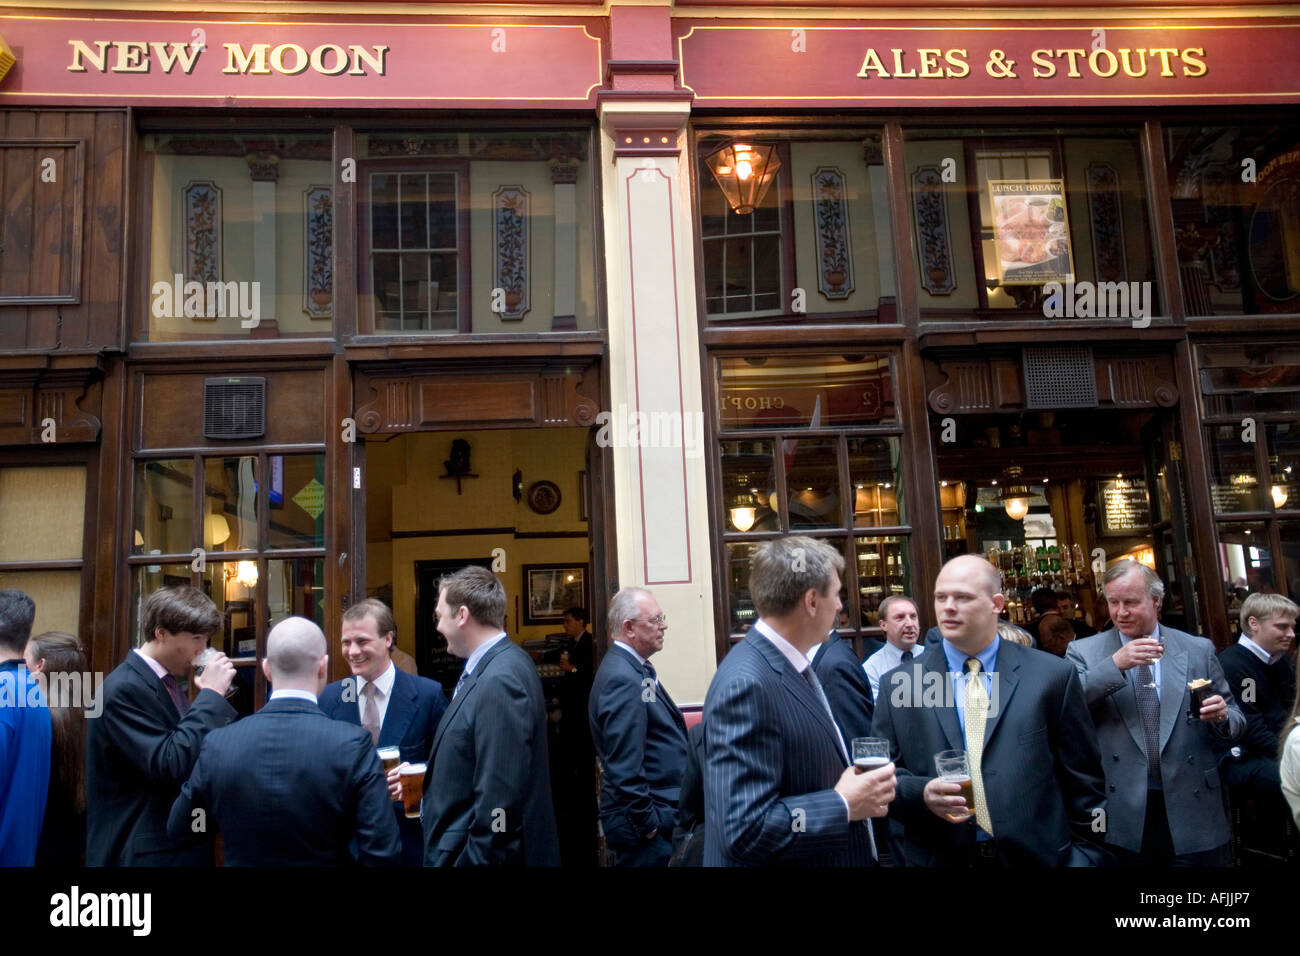 businesspeople-on-lunch-break-at-new-moon-pub-leadenhall-market-london-AFJJP7.jpg